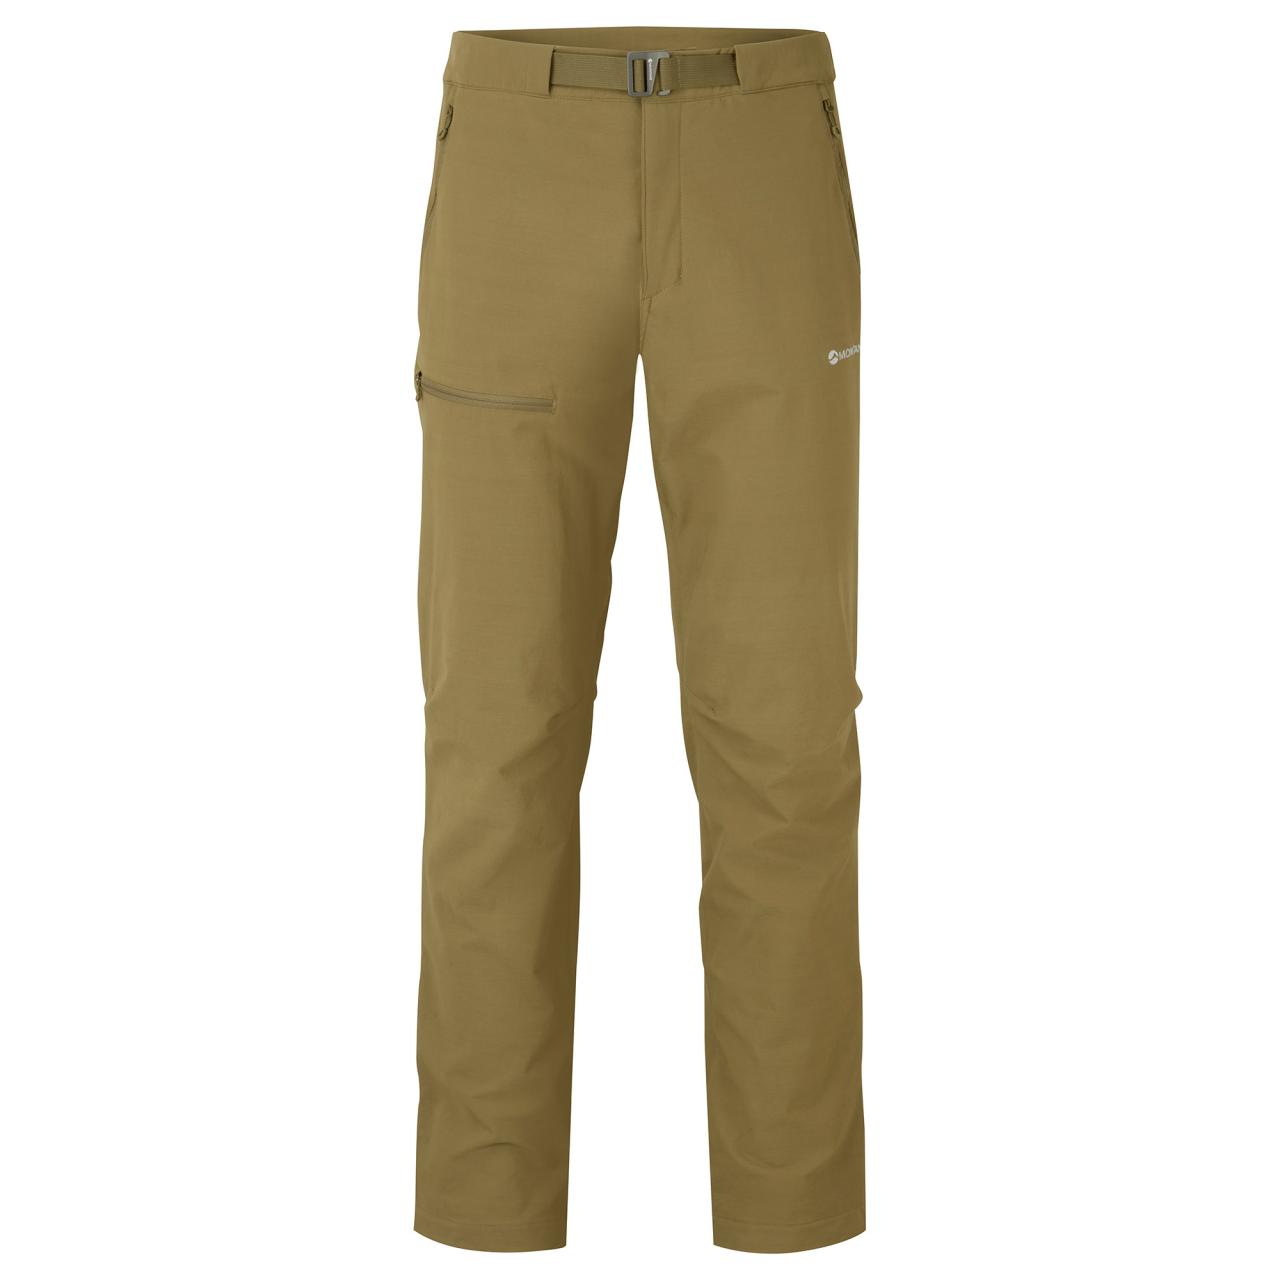 TENACITY PANTS REG LEG-OLIVE-34/L pánské kalhoty zelené